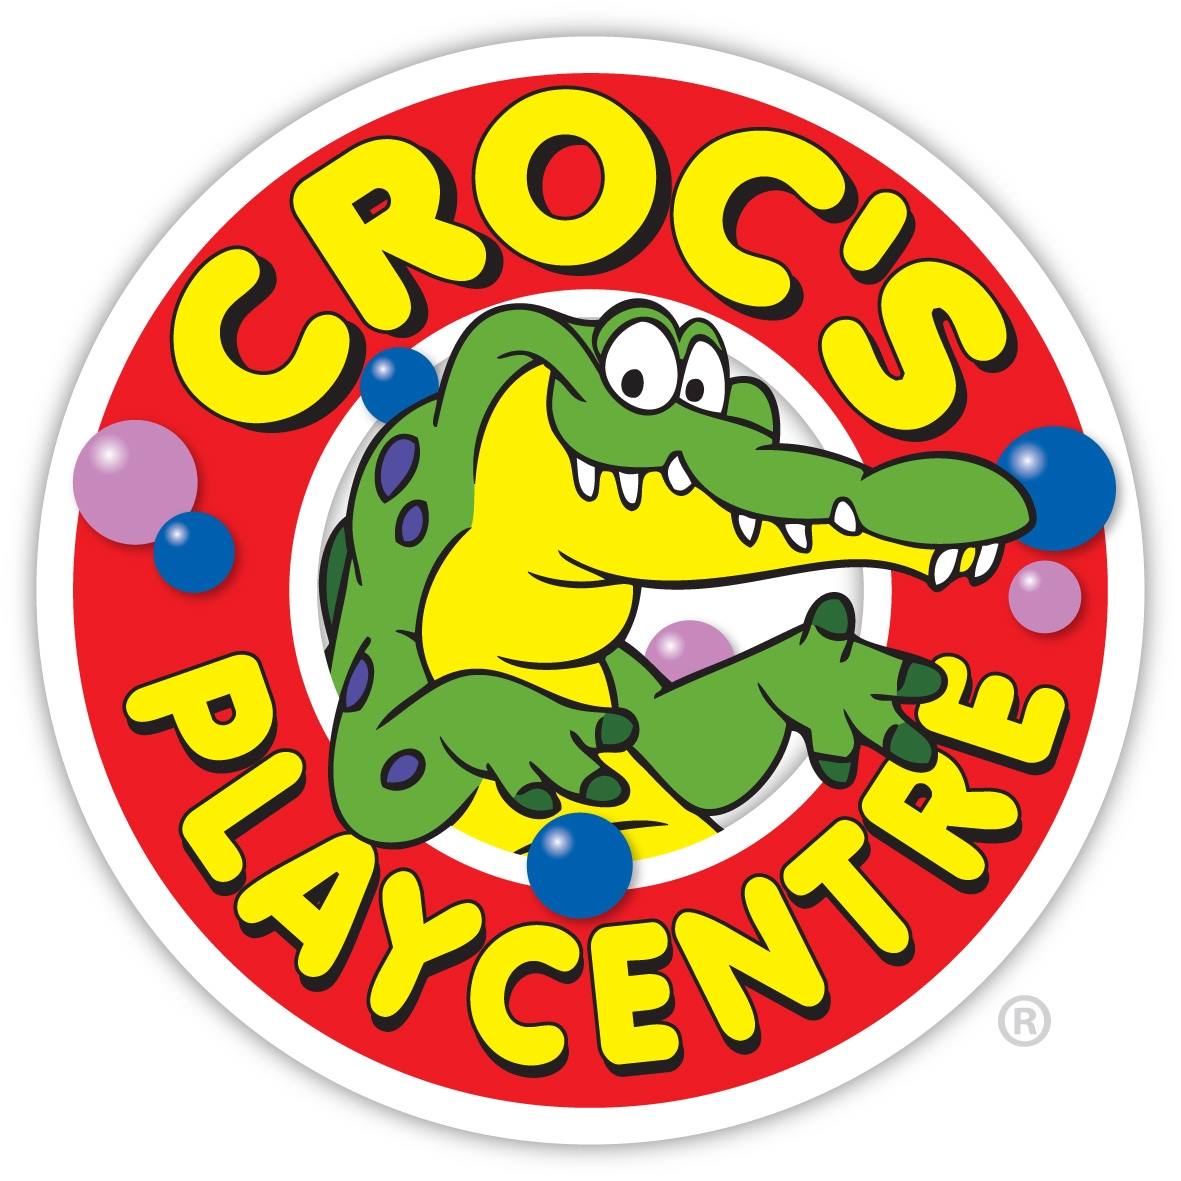 Croc’s Playcentre